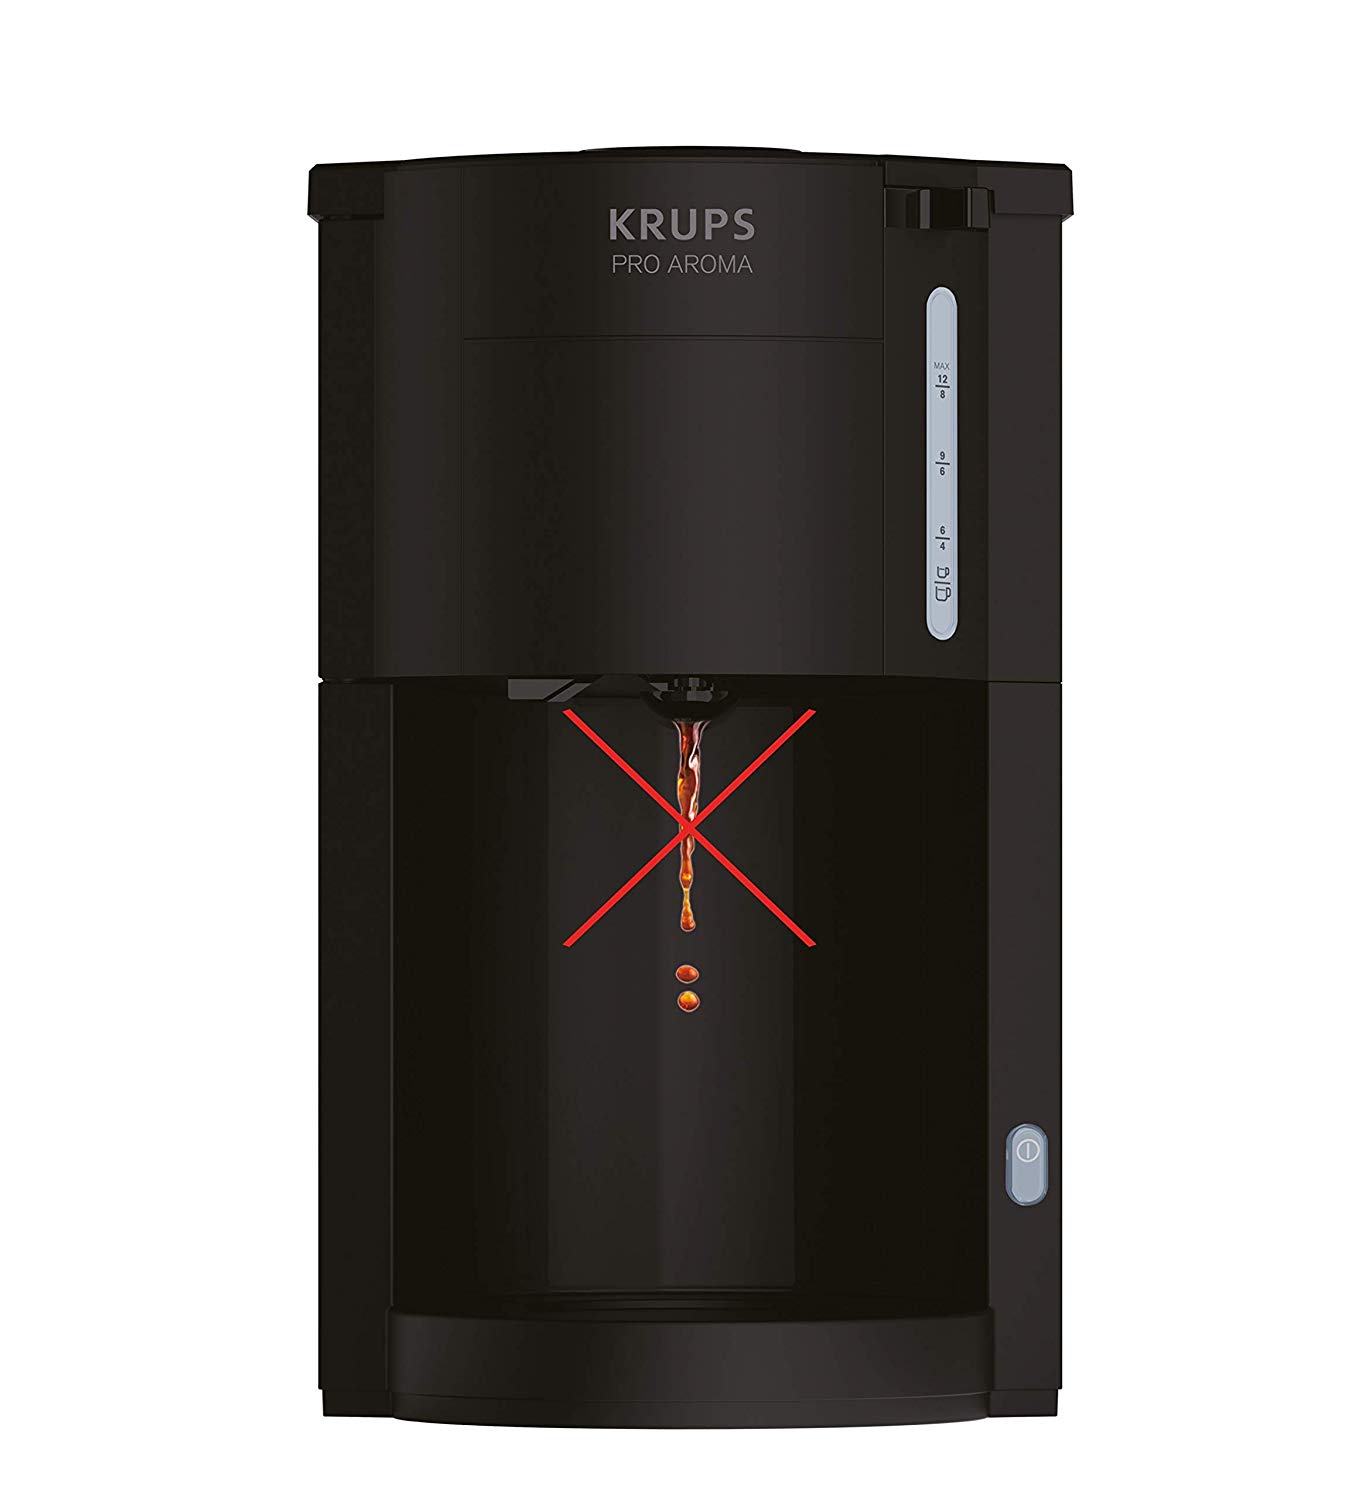 Krups Km3038 Proaroma Thermal Filter Coffee Maker Black